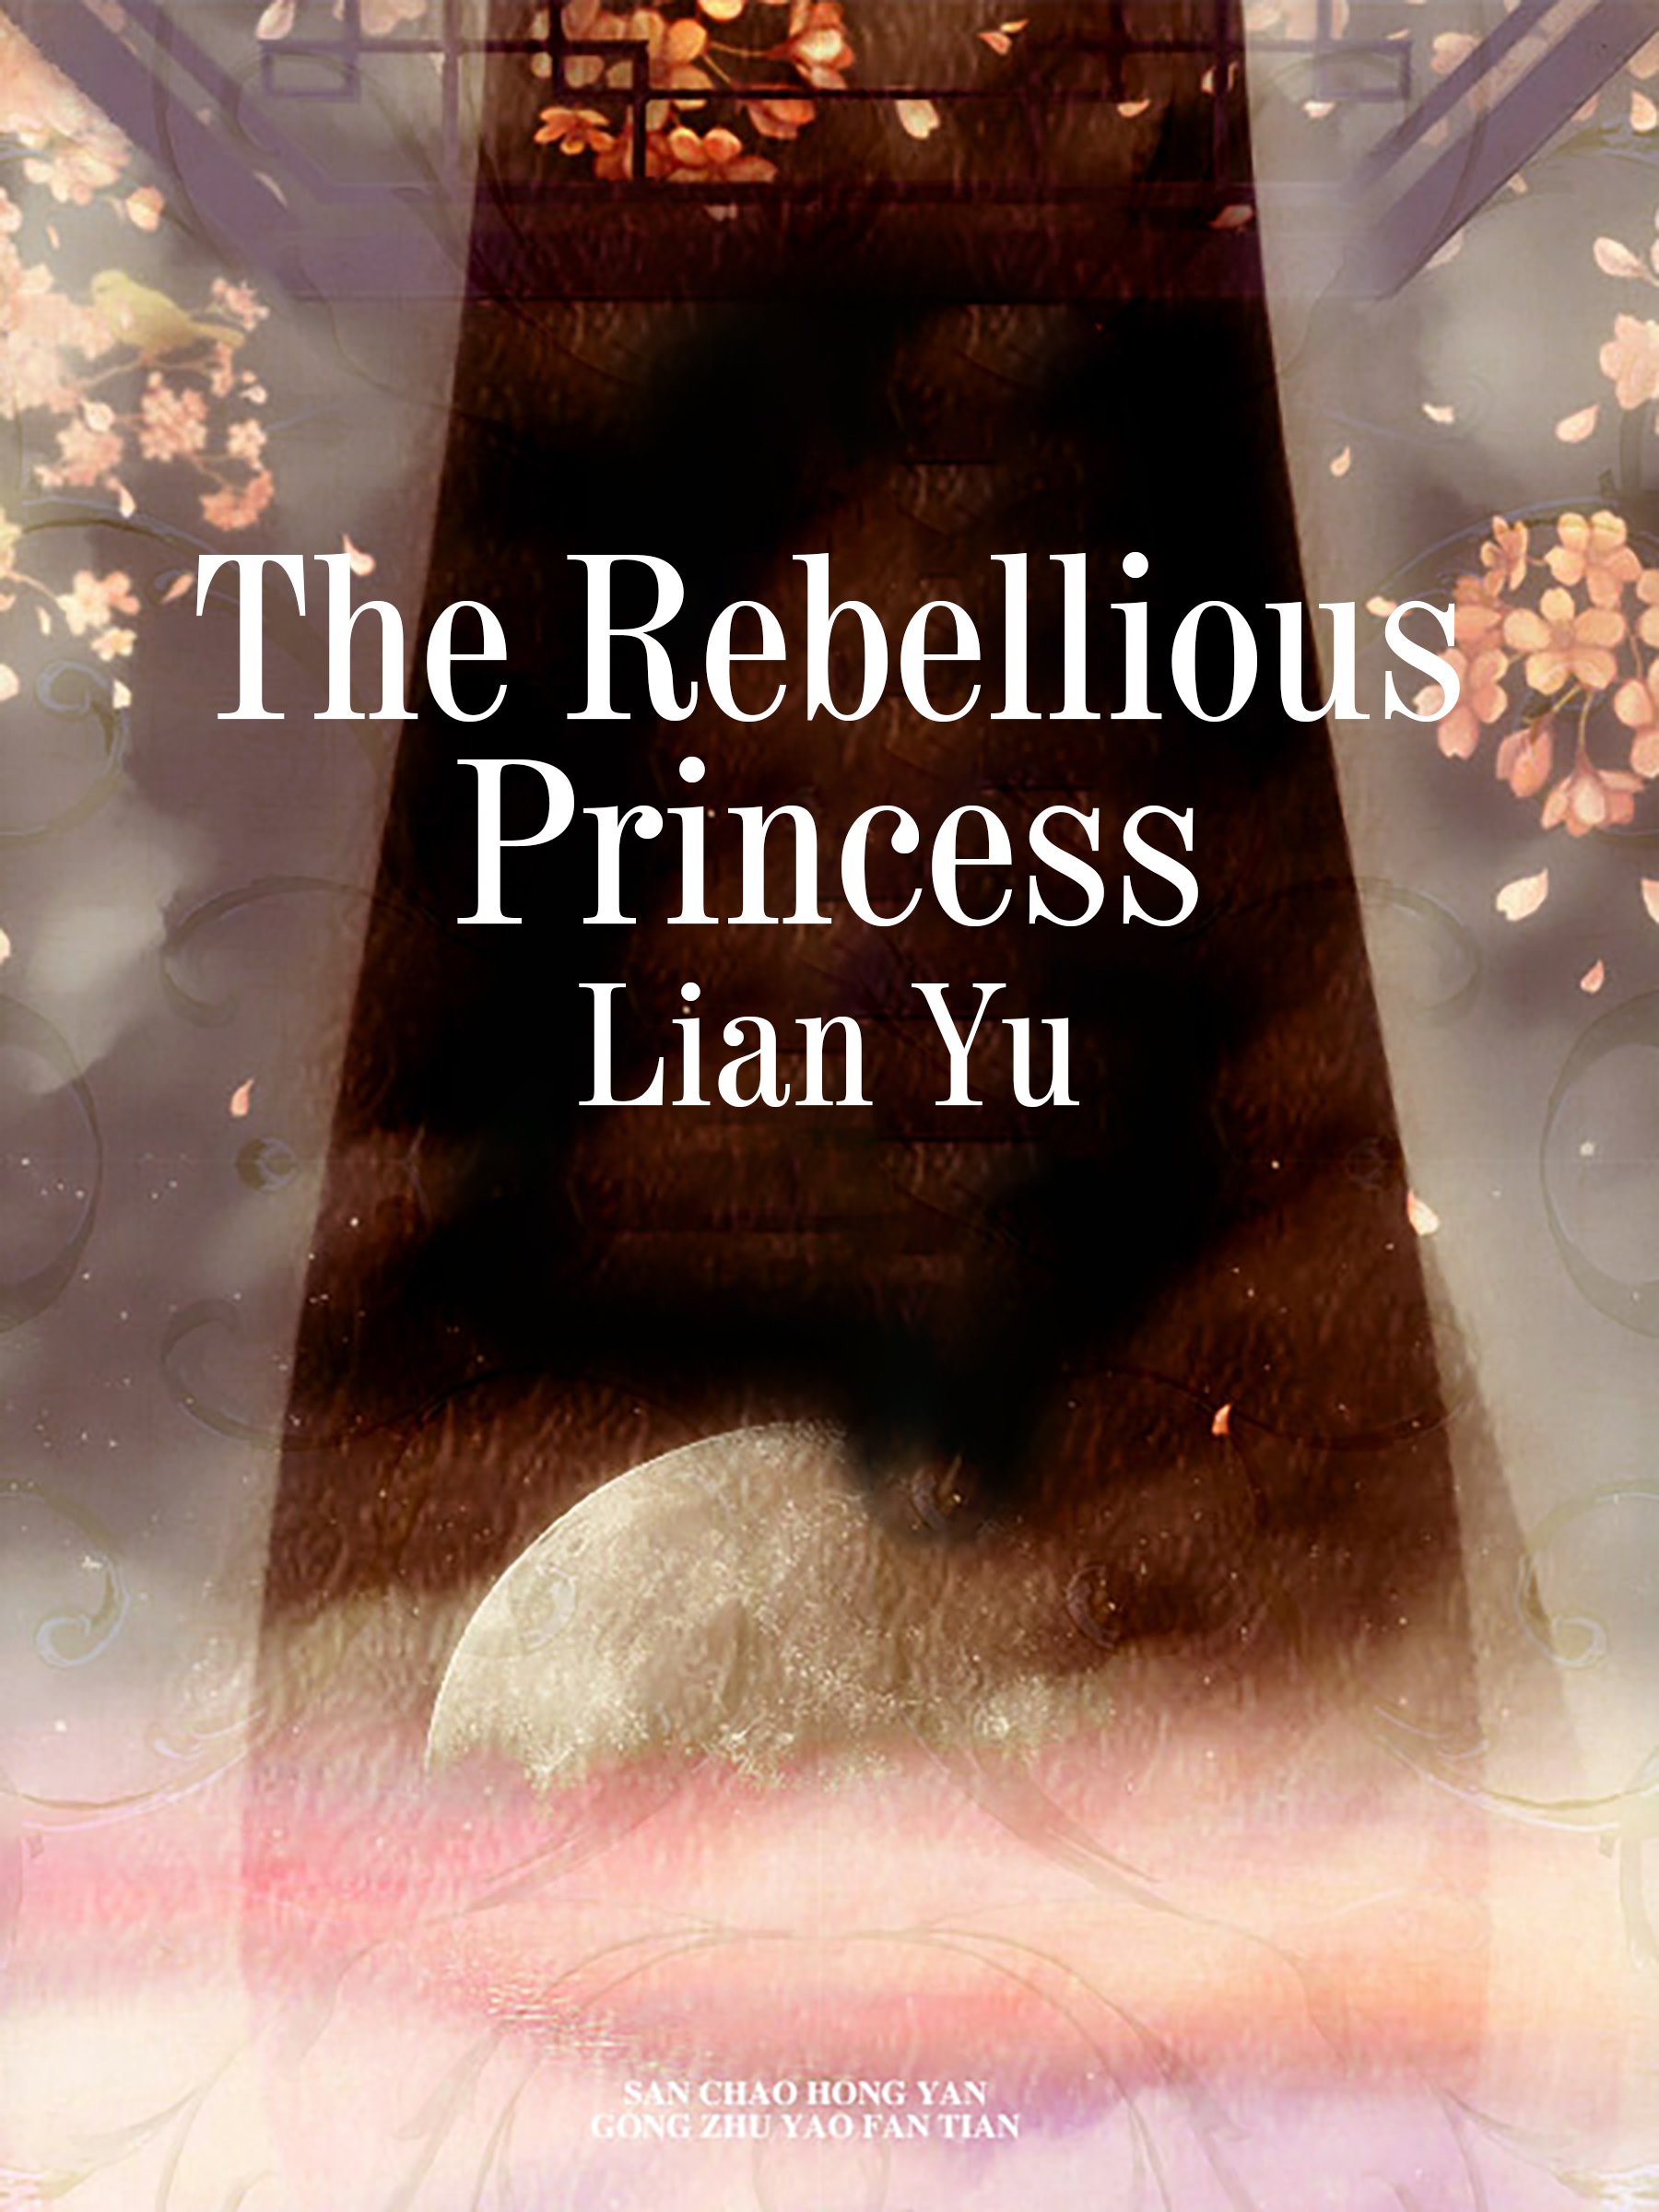 Memoirs of a Rebellious Princess by Elaine Williams